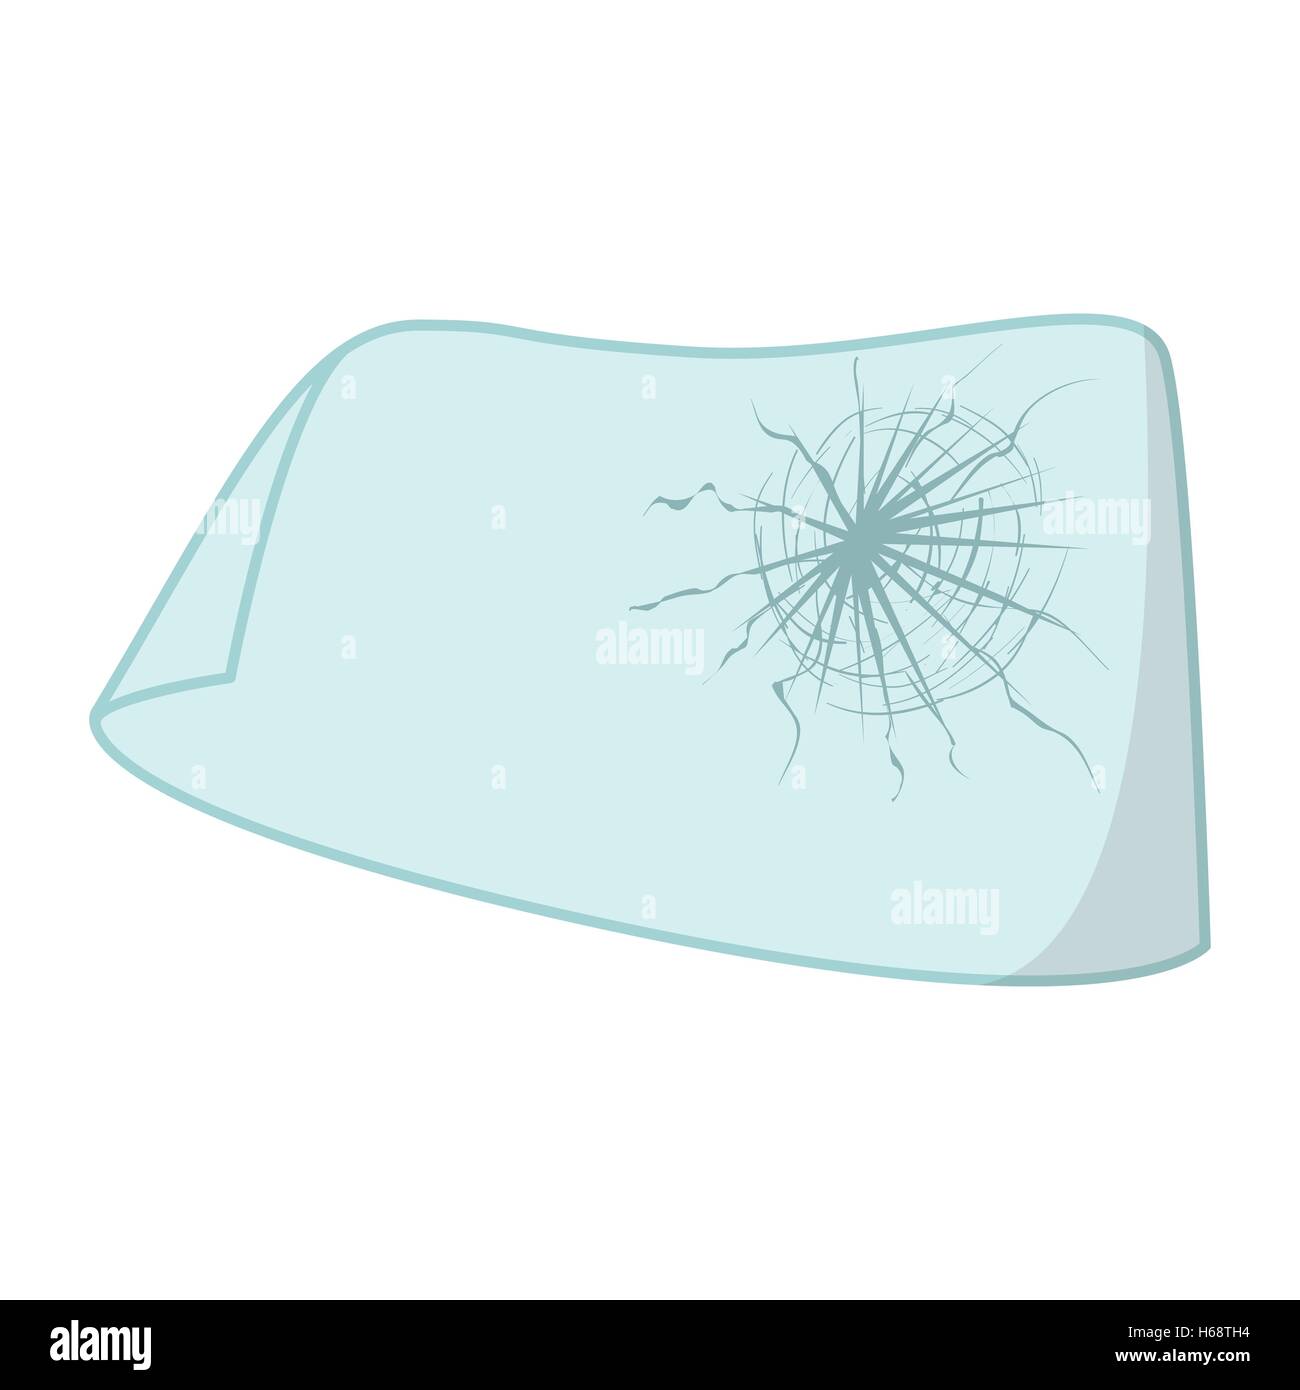 Cracked car windshield cartoon icon Stock Vector